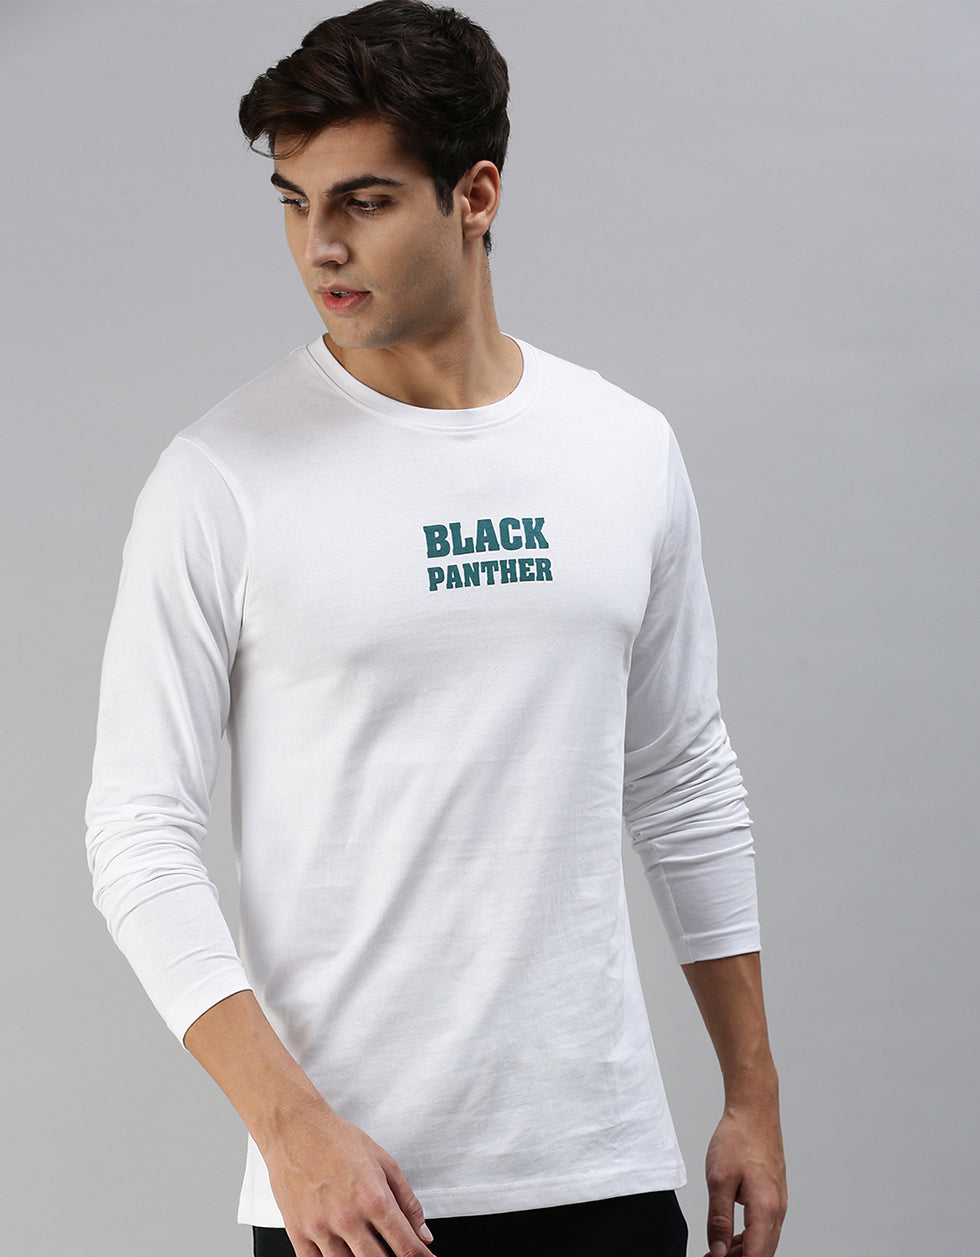 Black Panther Full Sleeve Printed White T-Shirt Veirdo